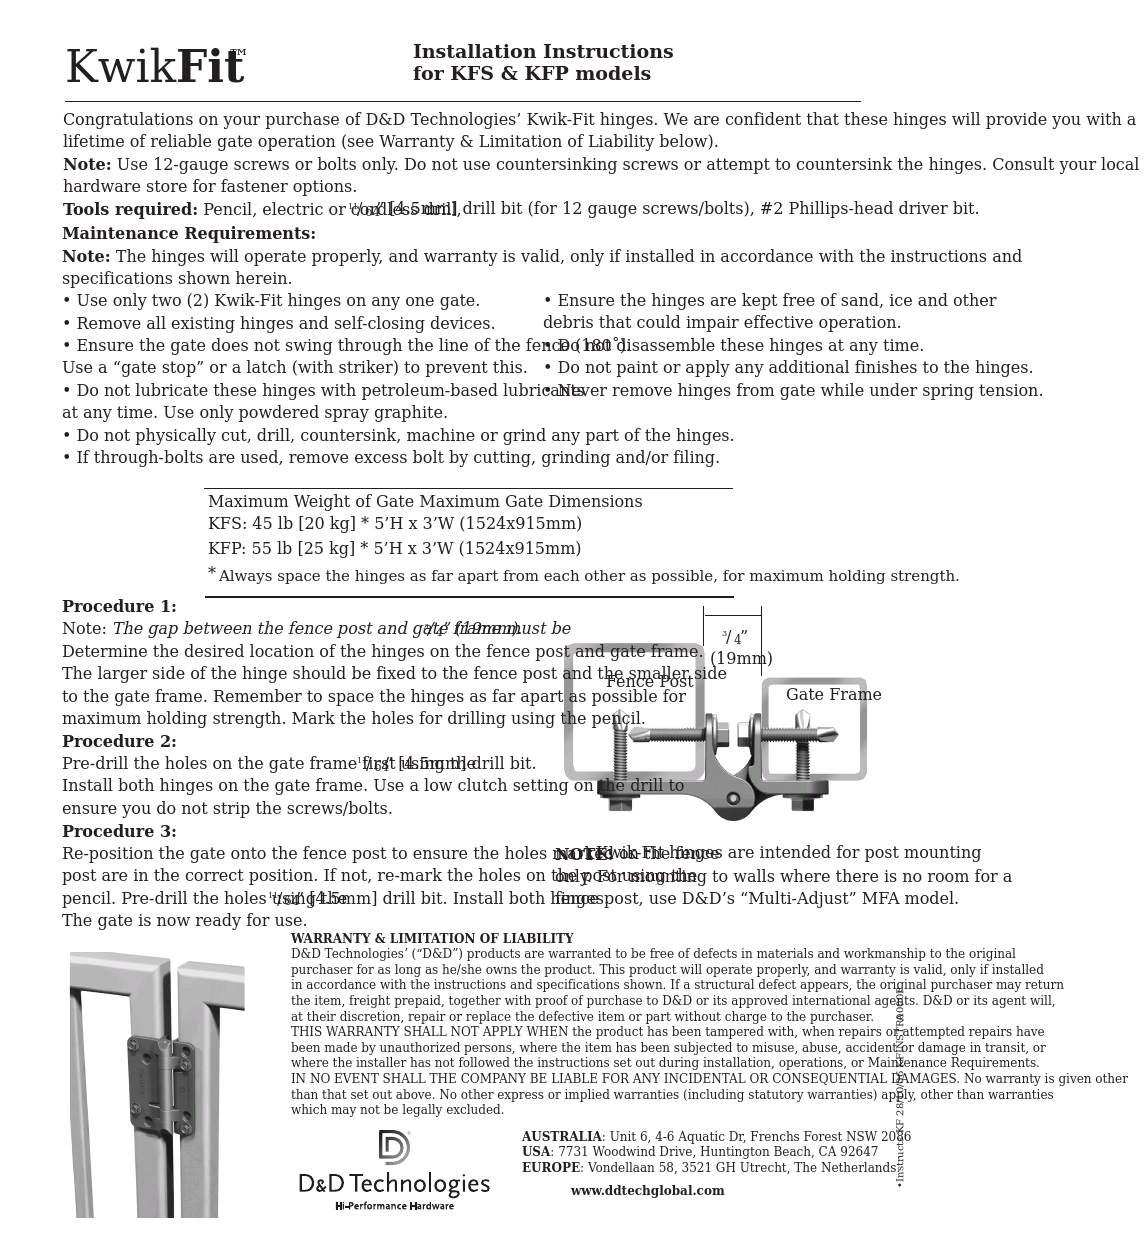 KwikFit Fixed Tension KFS & KFP